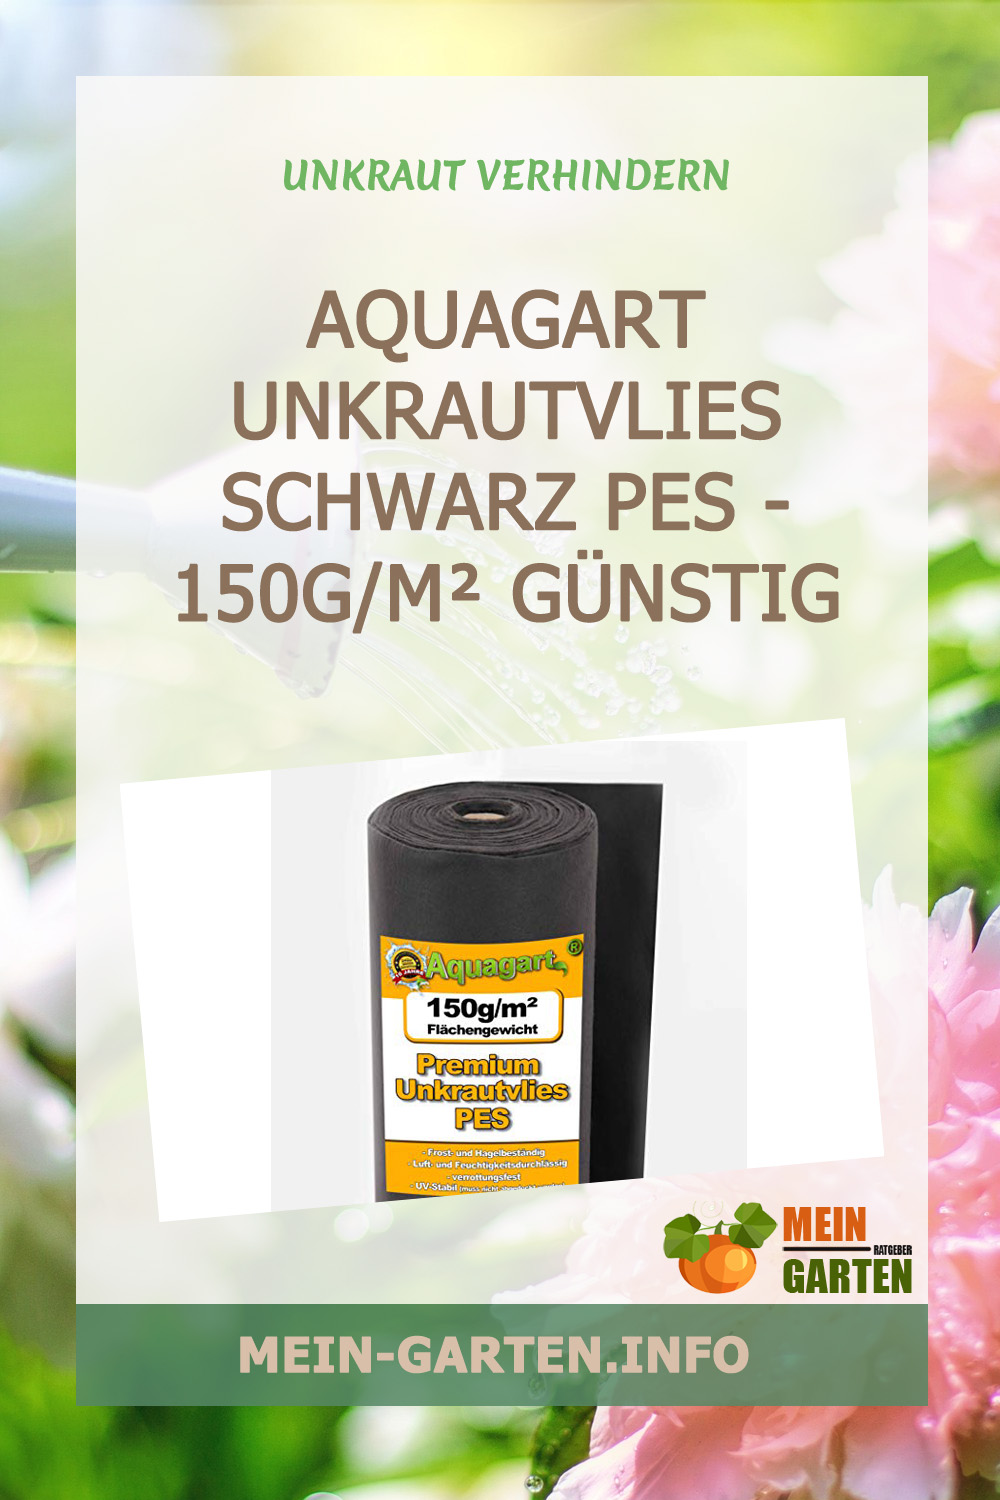 Aquagart Unkrautvlies schwarz PES – 150g/m² günstig kaufen